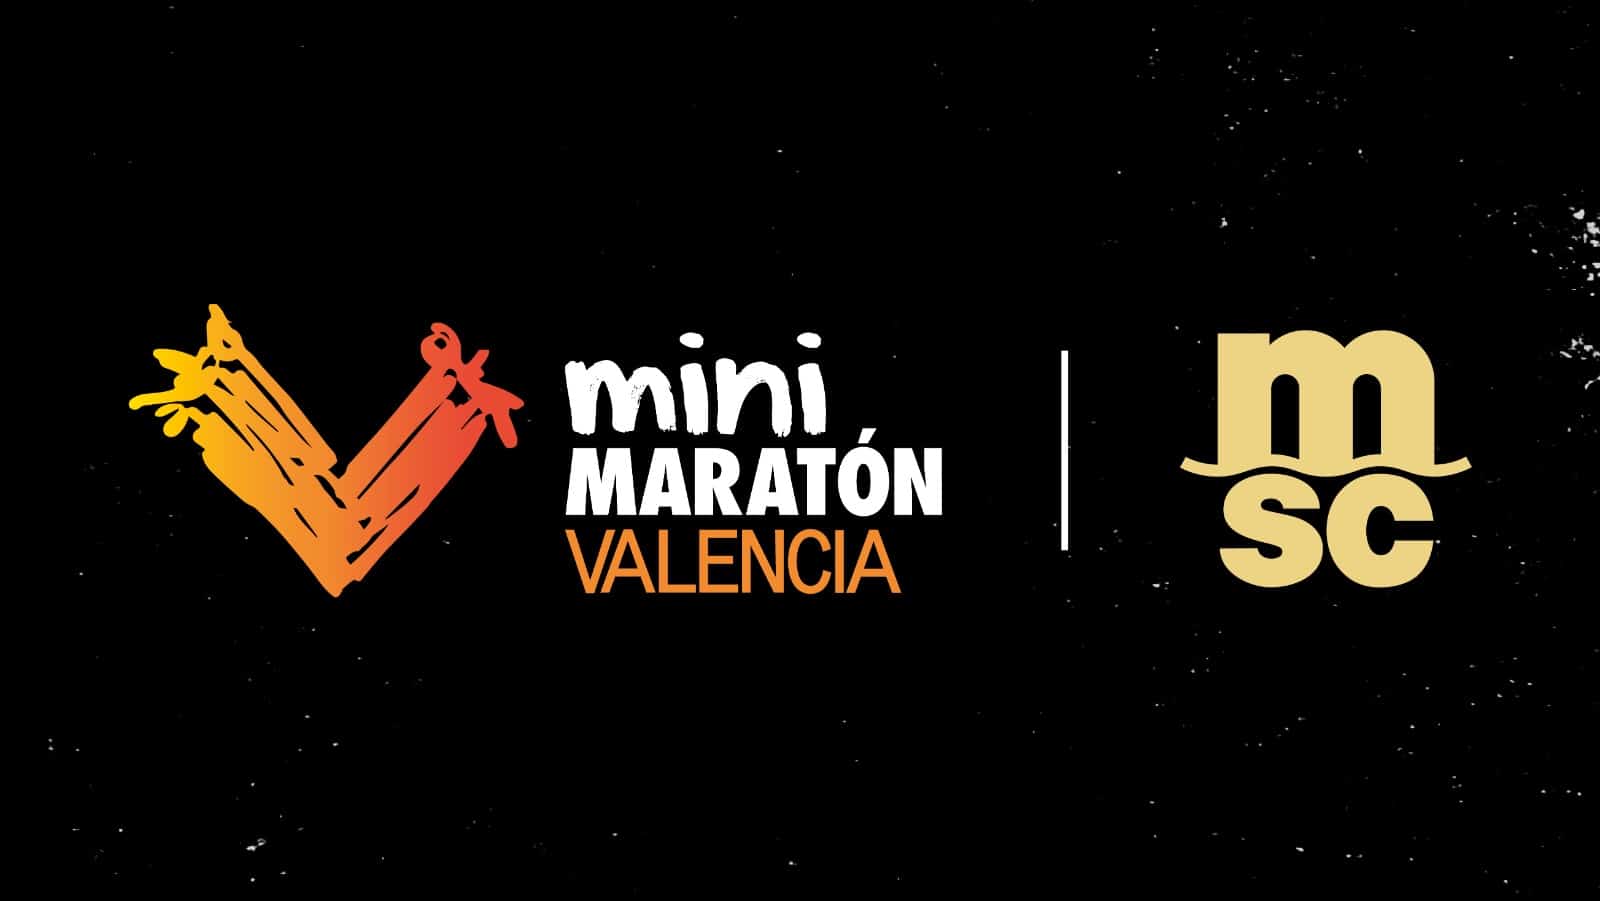 Mini Maratón Valencia MSC